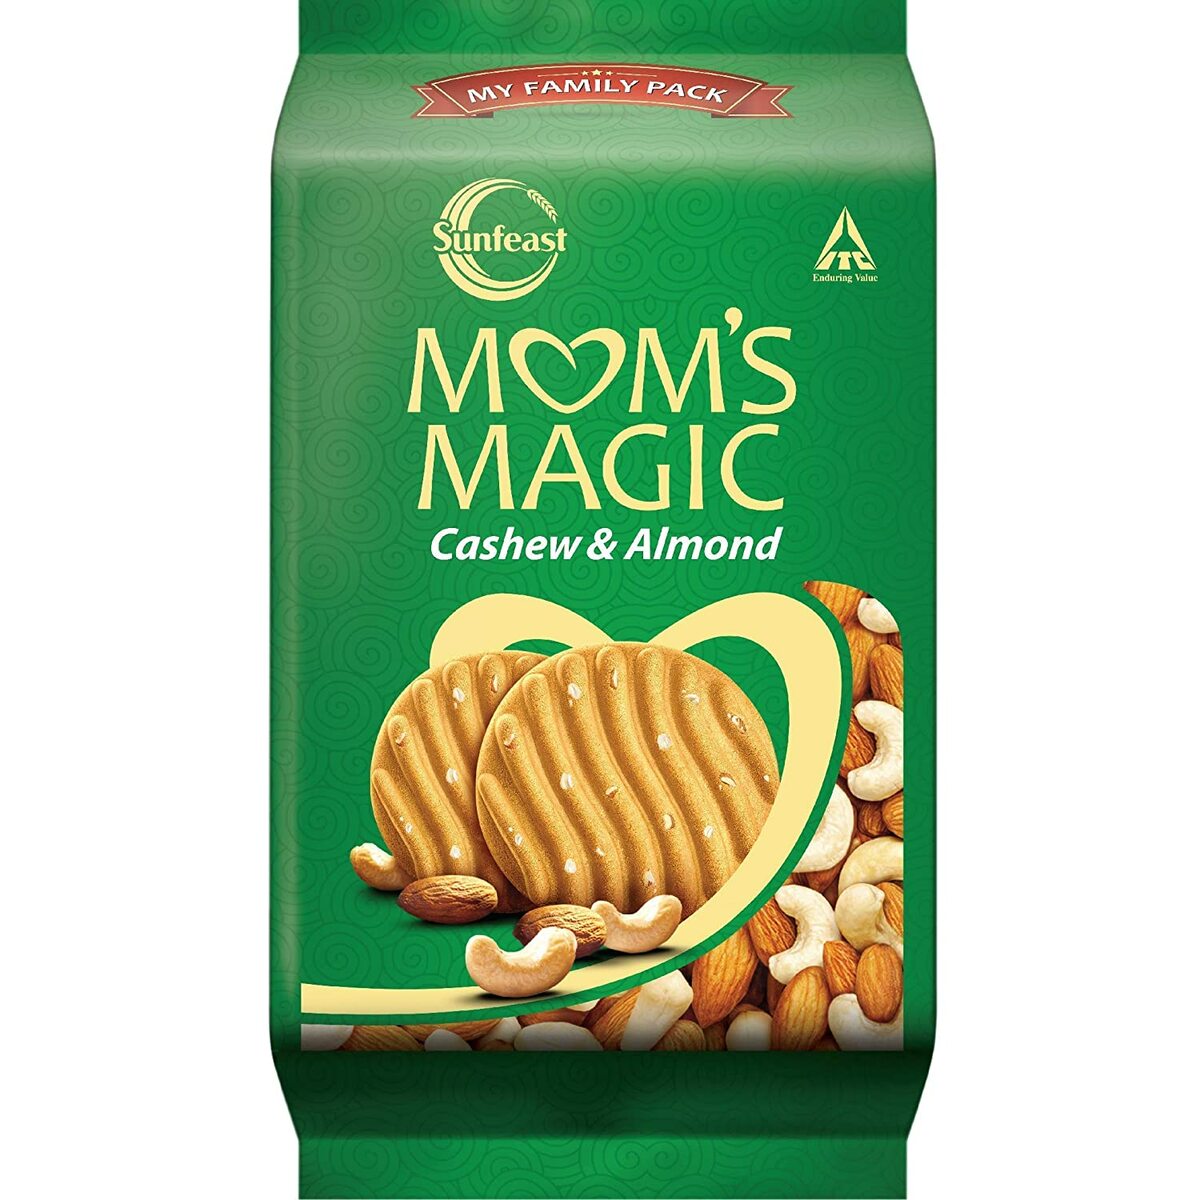 Sunfeast Moms Magic Cashew & Almond 584g